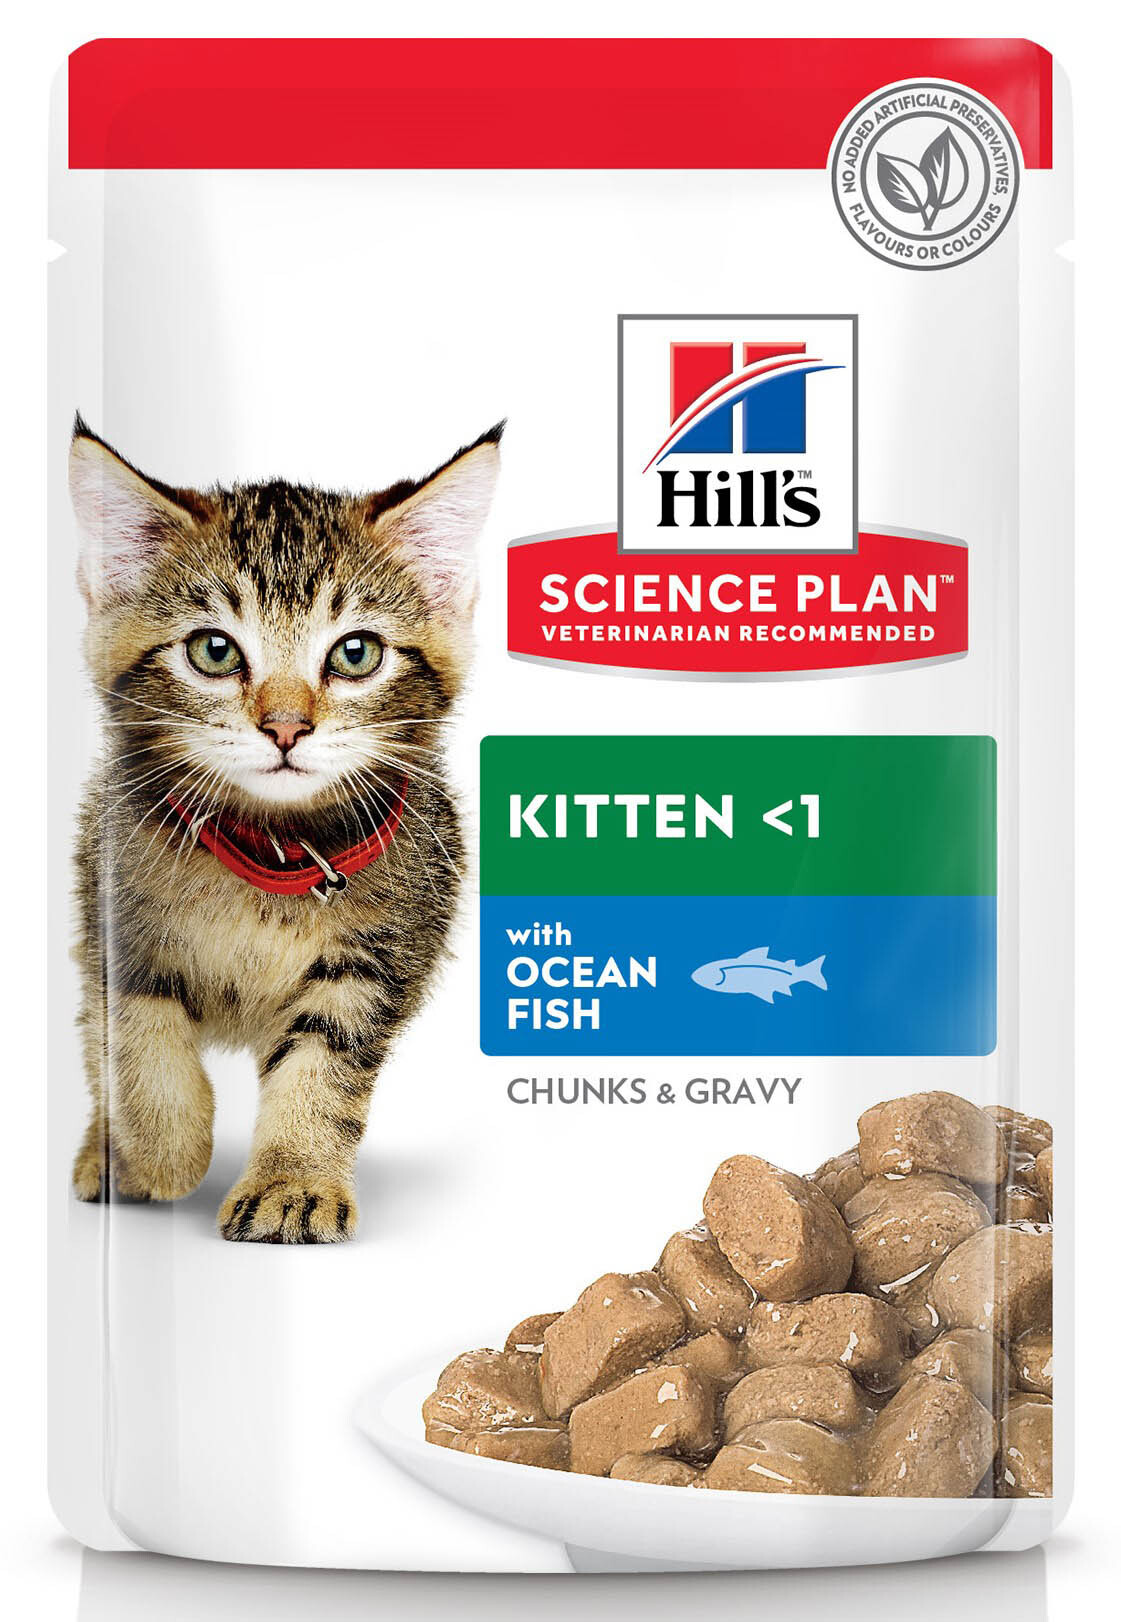 Хиллс с курицей для кошек. Хиллс Киттен корм. Корм Хиллс для котят. Хиллс влажный корм для котят. Кошачий корм Хиллс для котят.